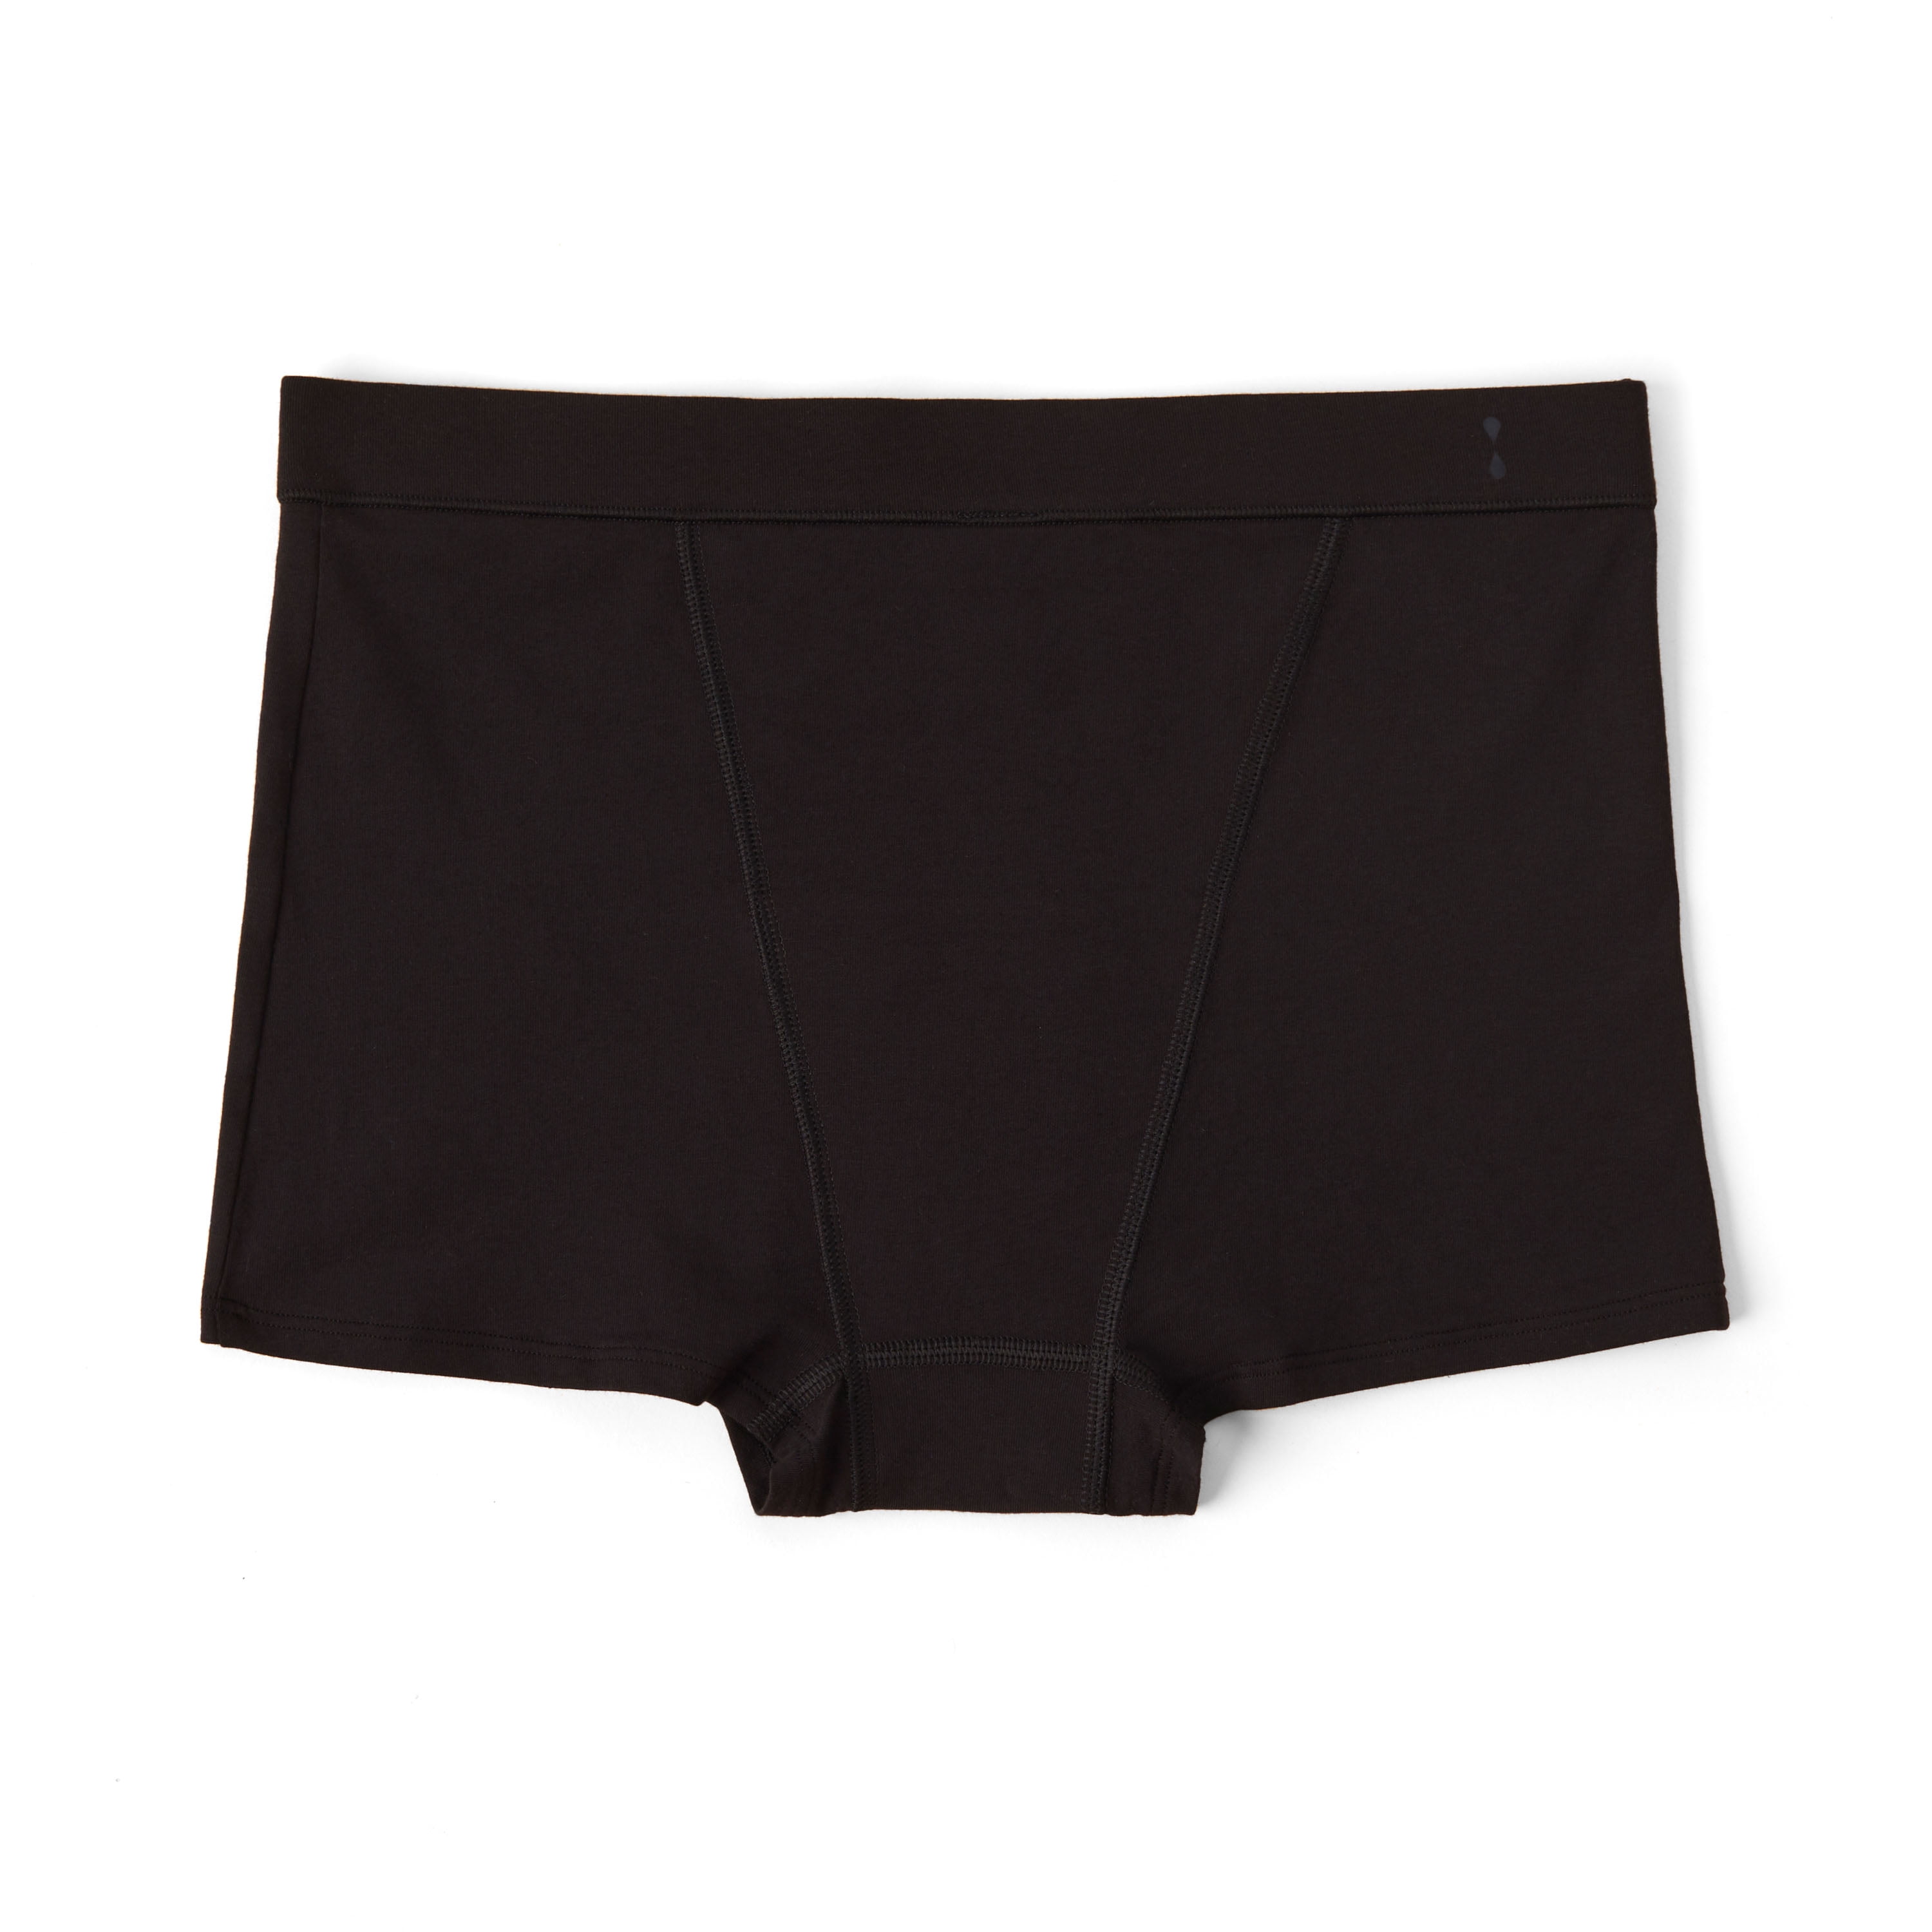 Thinx BTWN Teen Period Underwear - Shorty Panties, Kenya